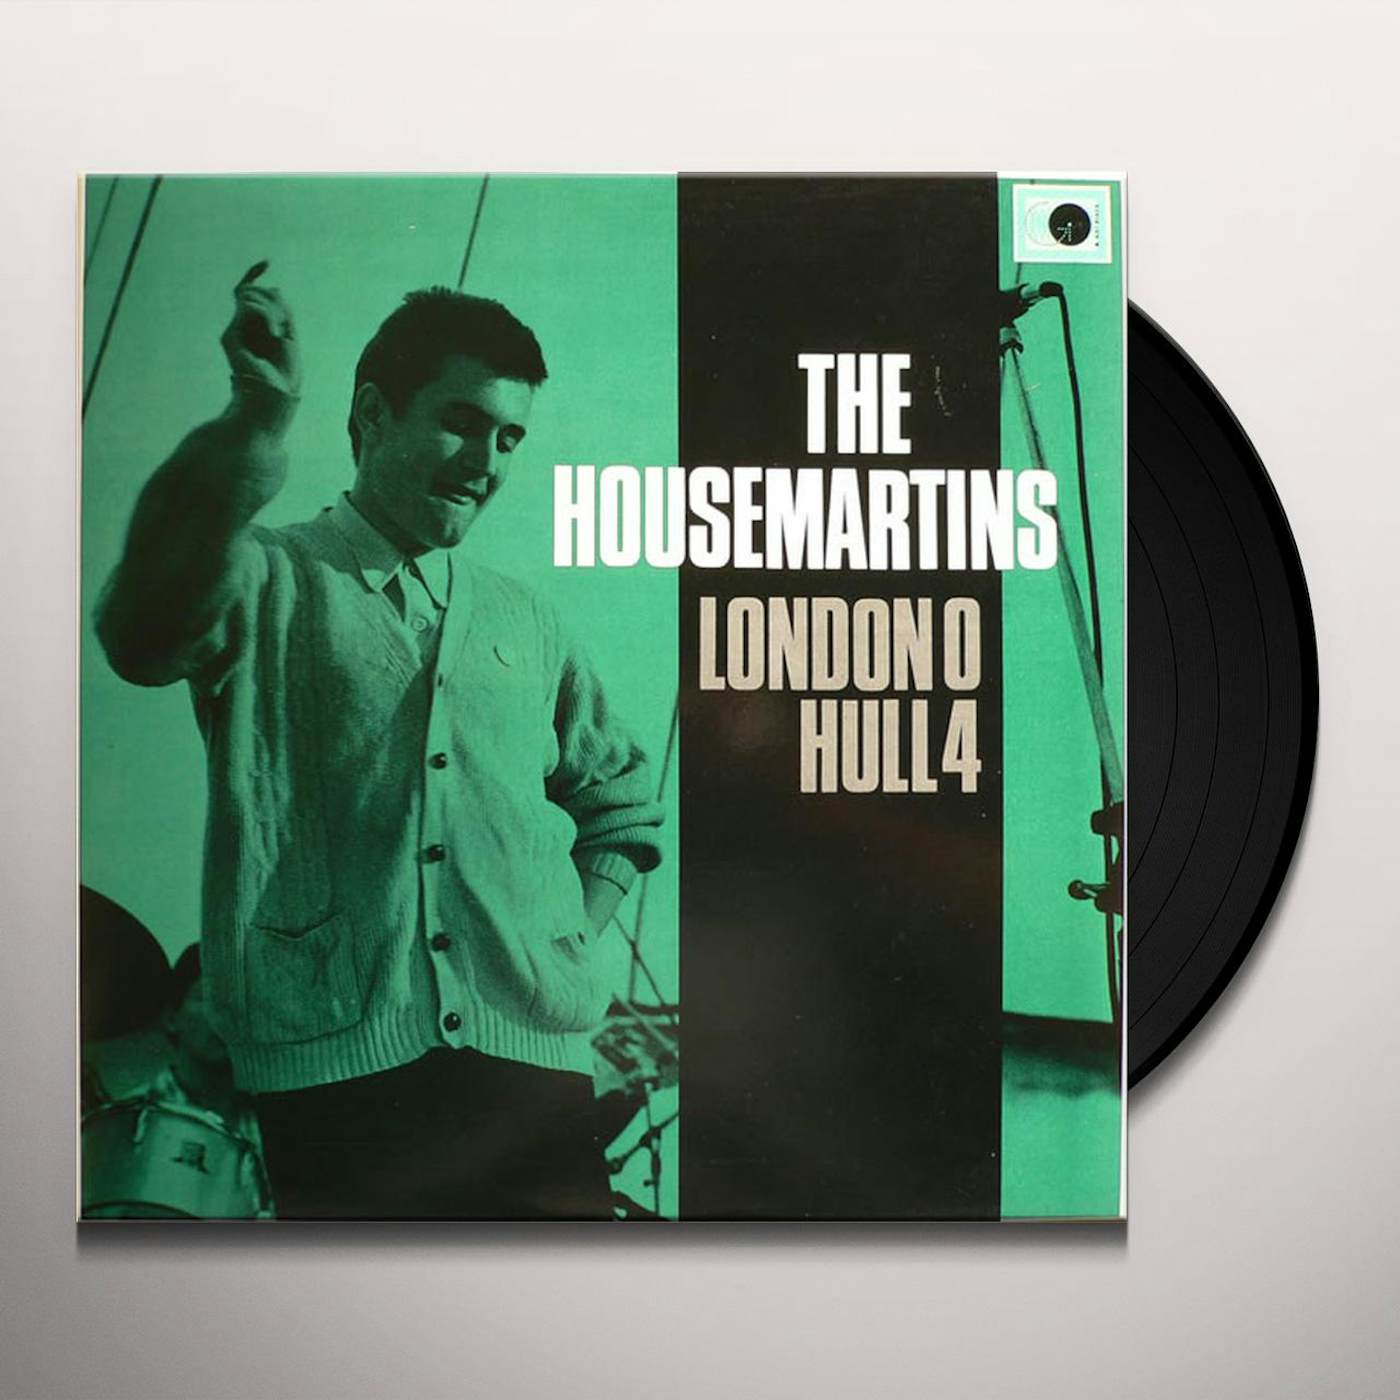 The Housemartins London 0 Hull 4 Vinyl Record